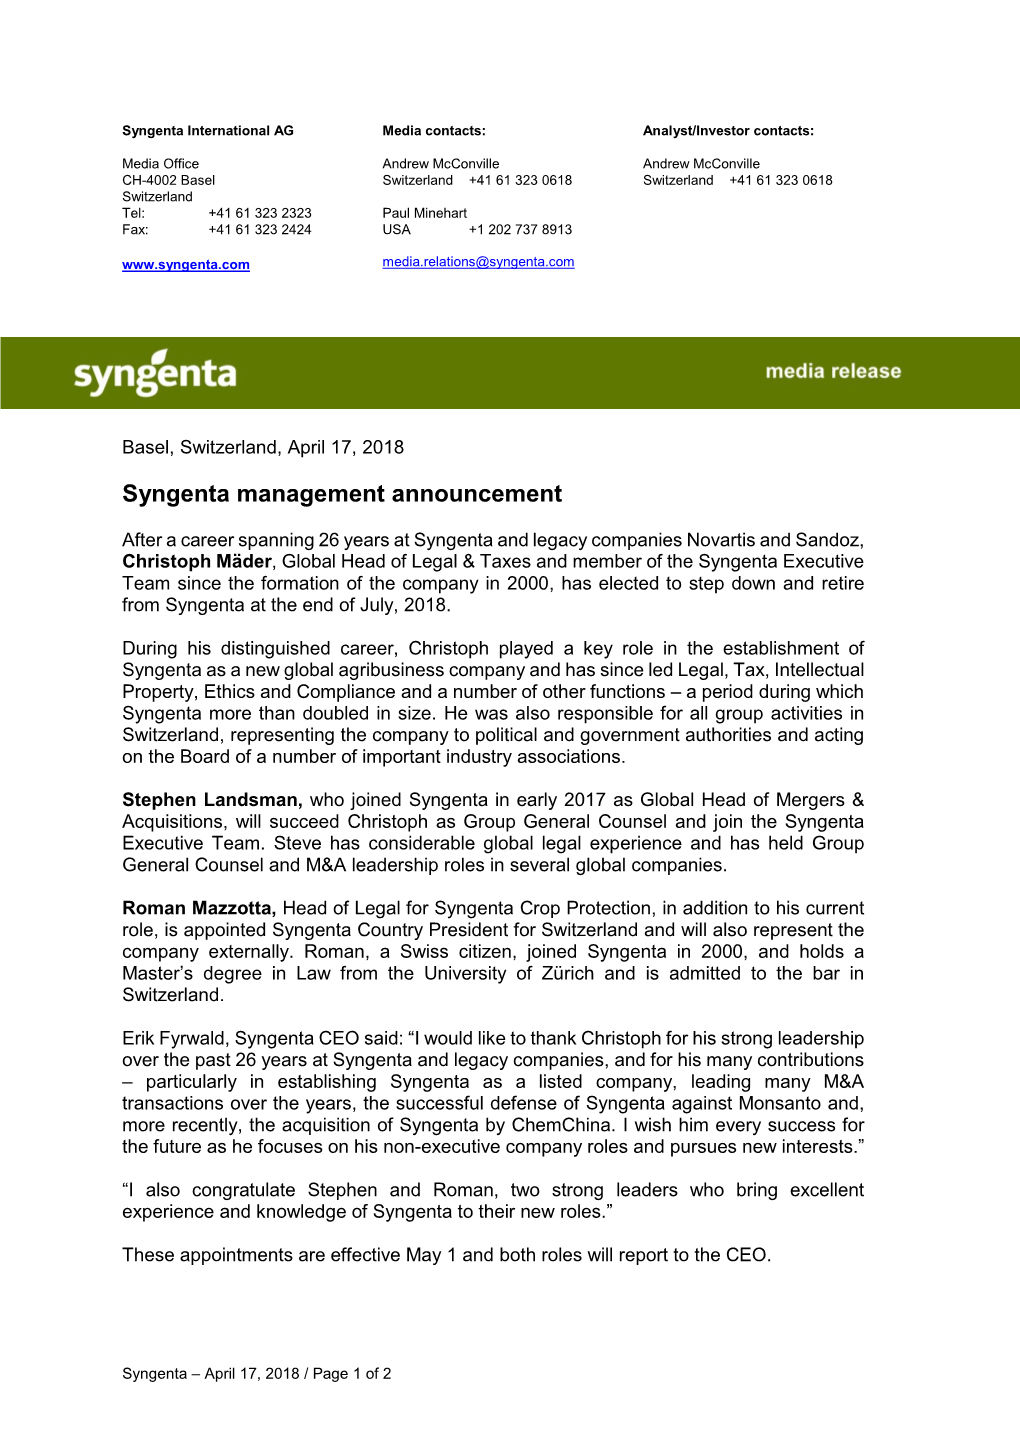 Syngenta Management Announcement